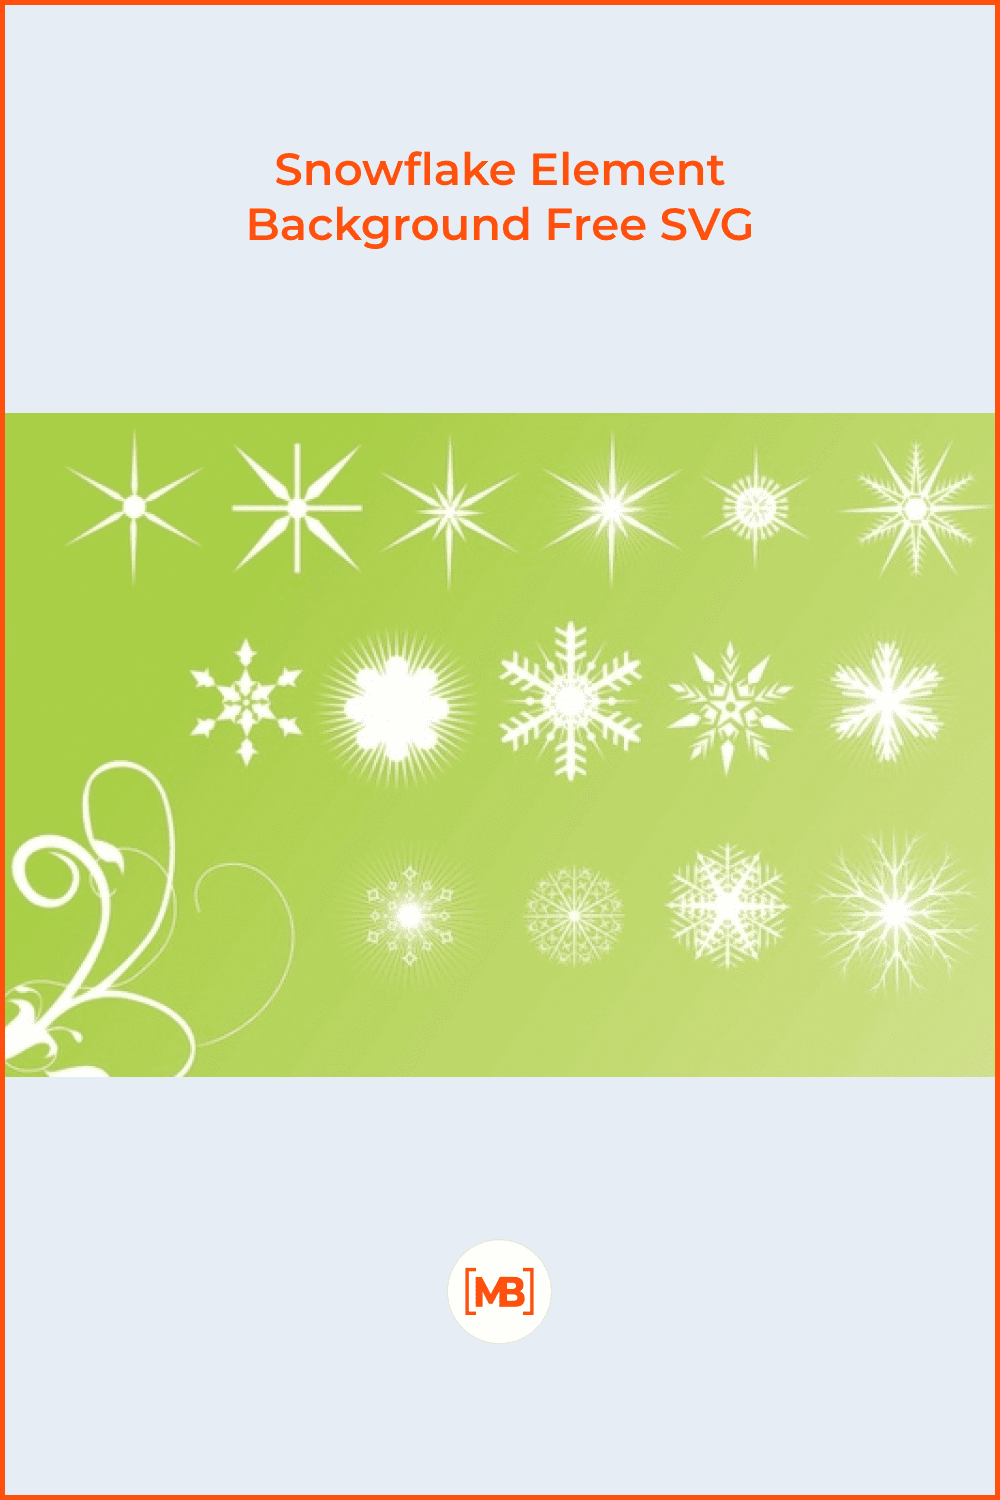 Snowflake Element Background Free SVG.